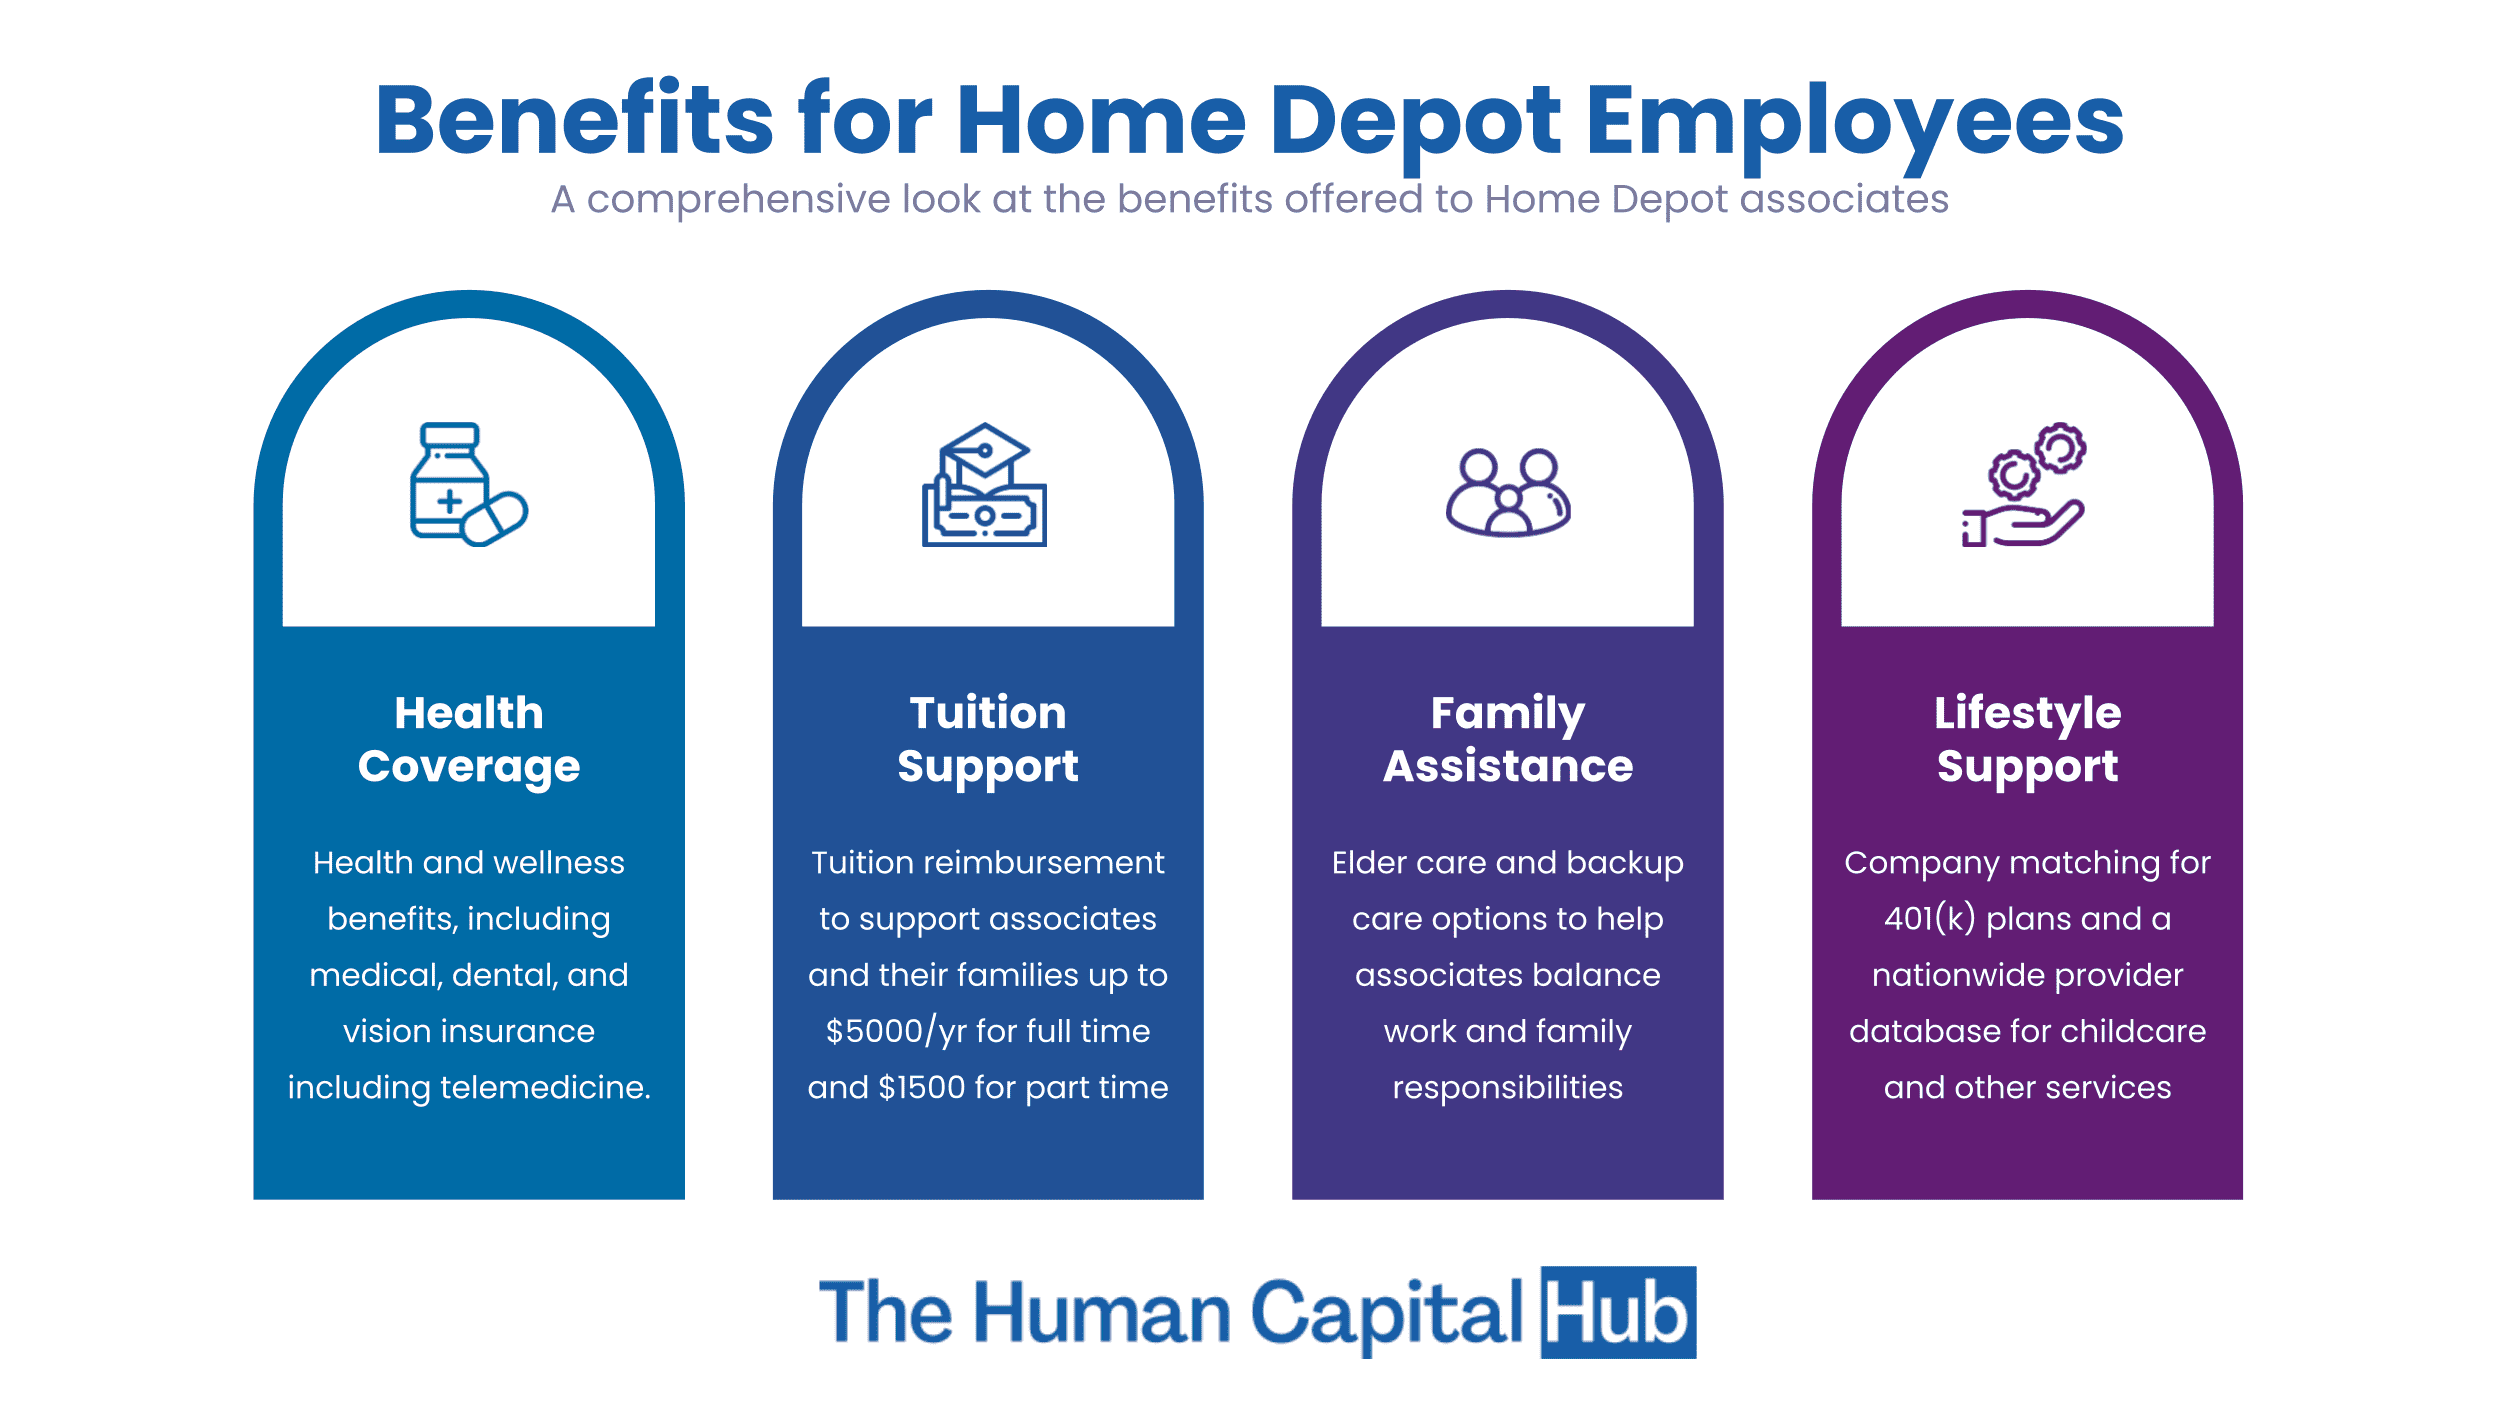 Home Depot Employees' Benefits